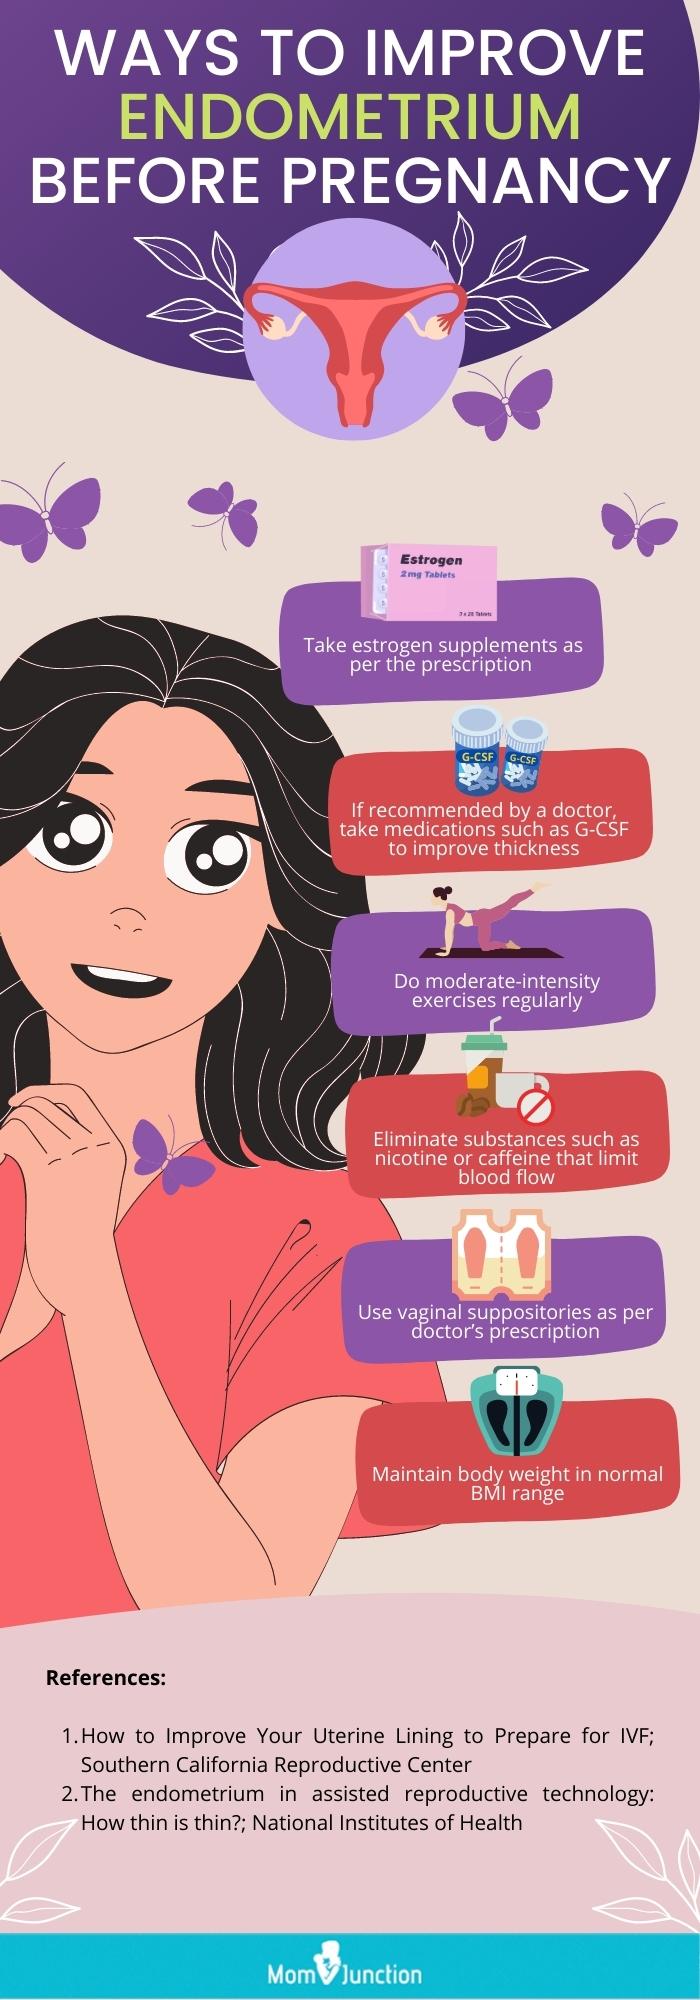 ways to improve endometrium before pregnancy [infographic]